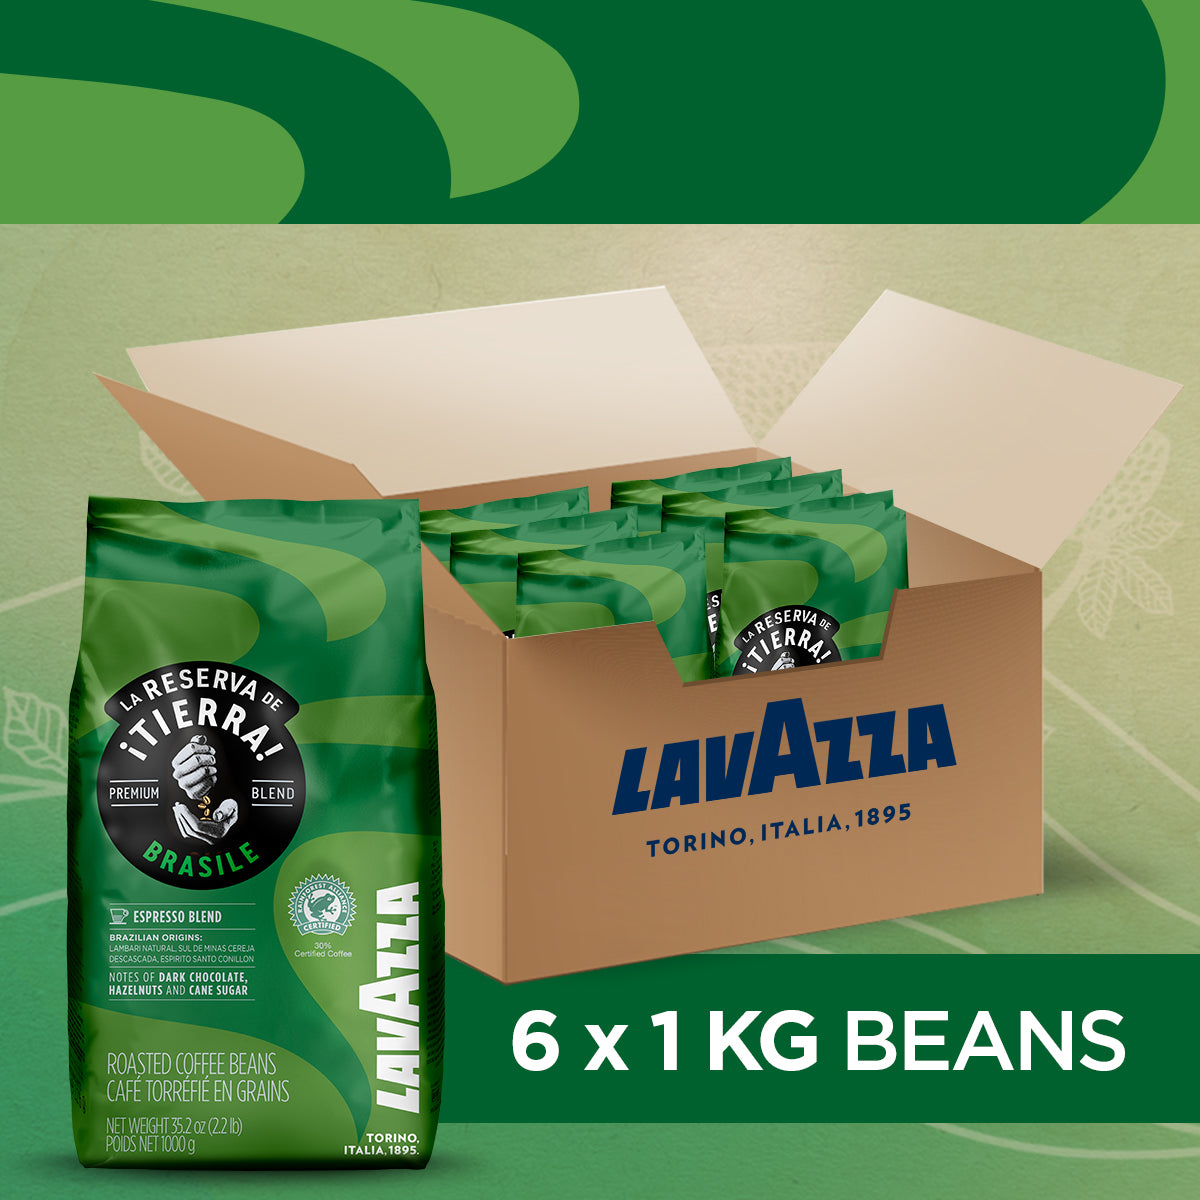 Lavazza Tierra Origins Brasile Coffee Beans 1kg (Green)